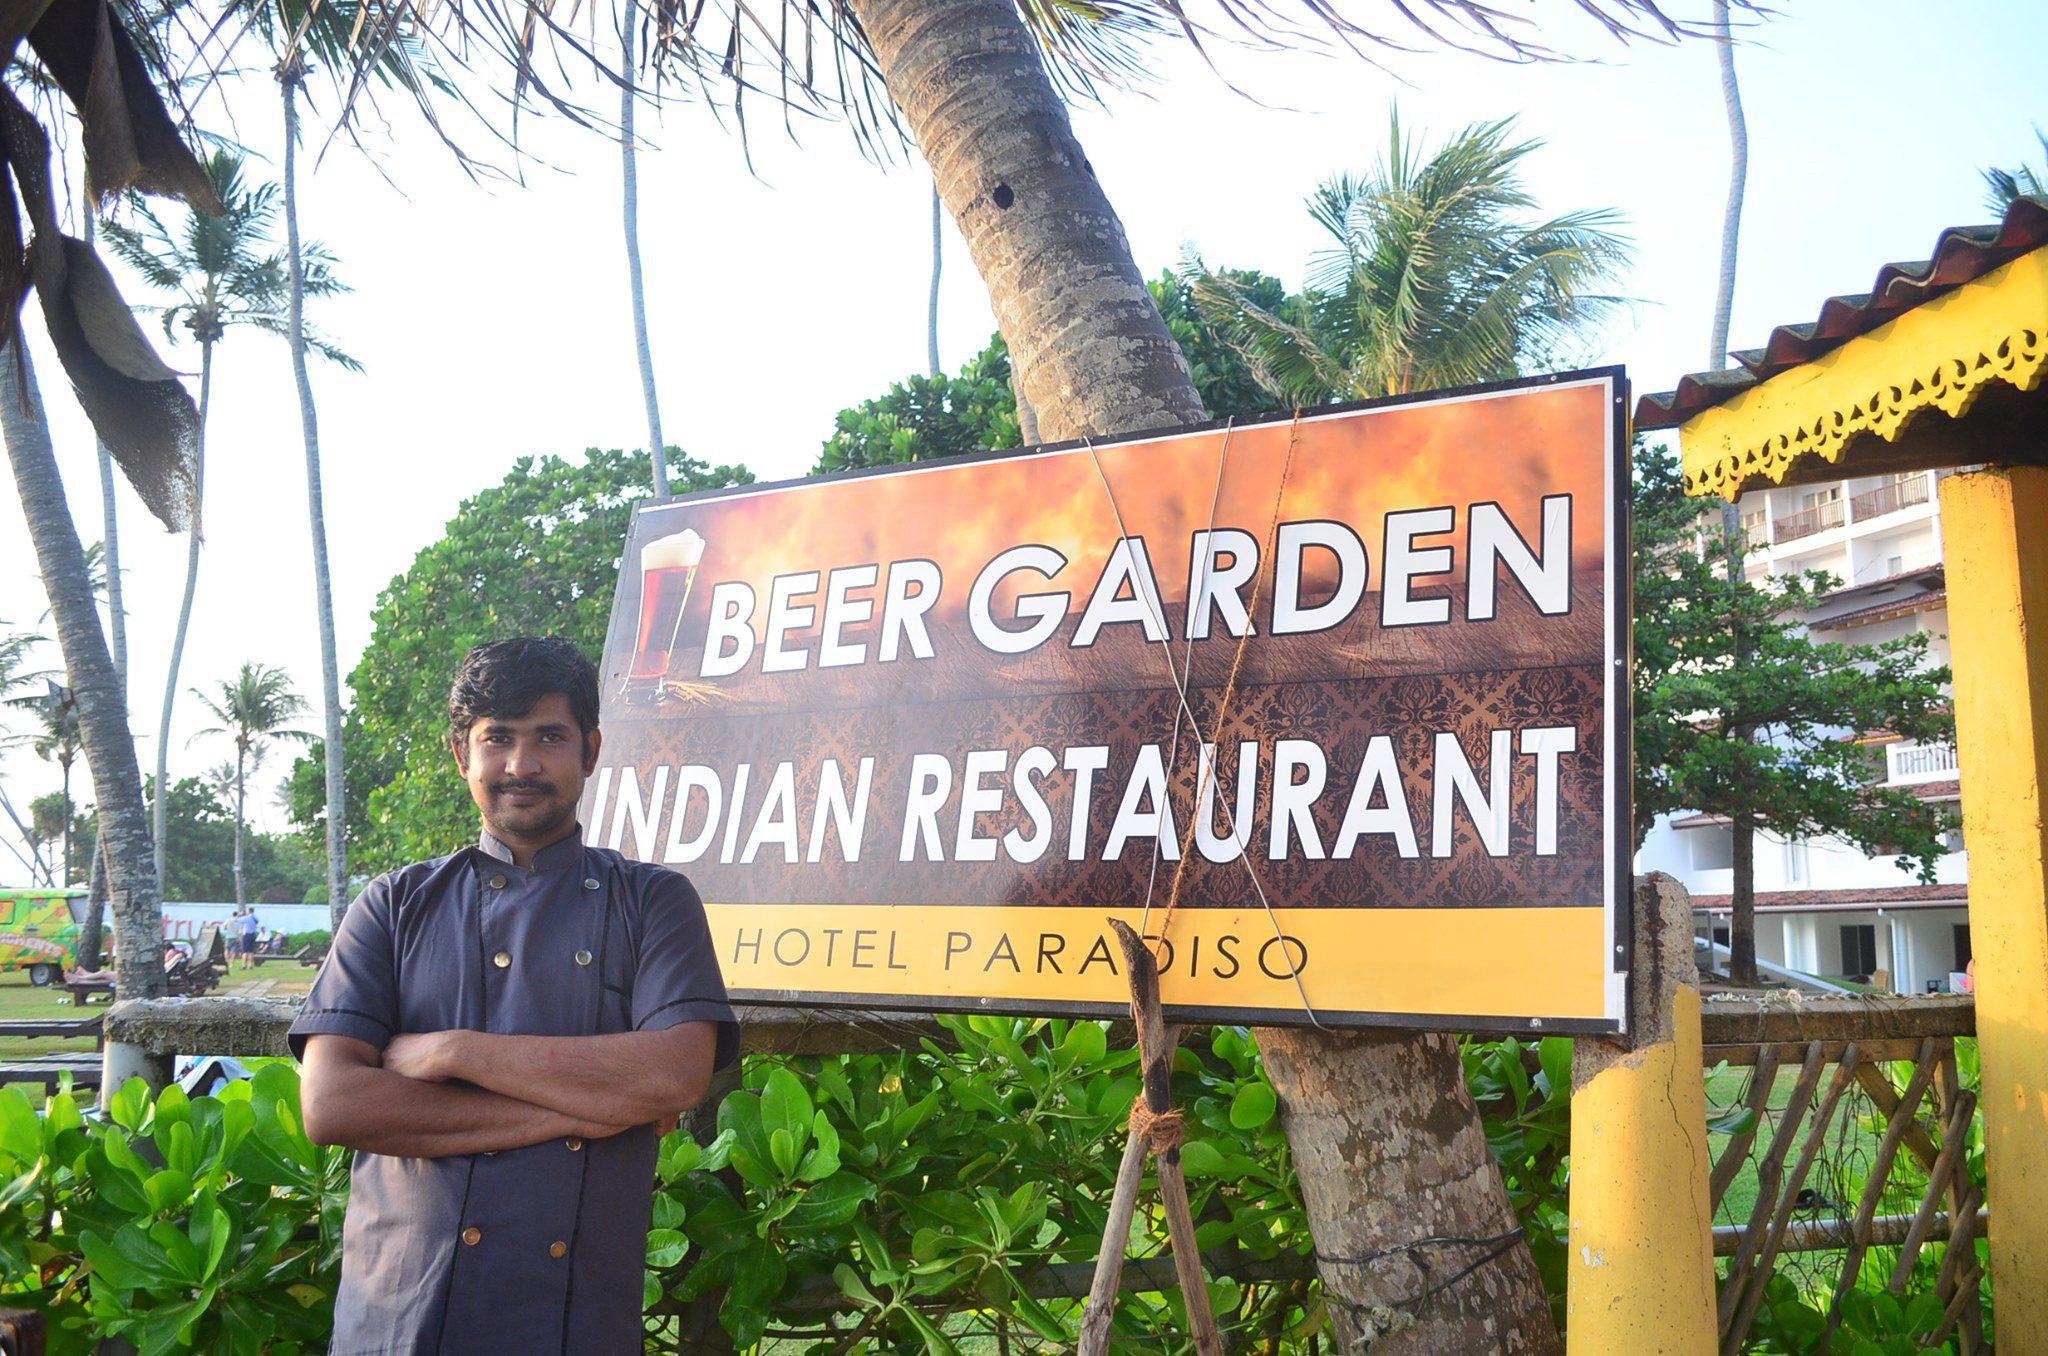 Indian Restaurant – Hotel Paradiso